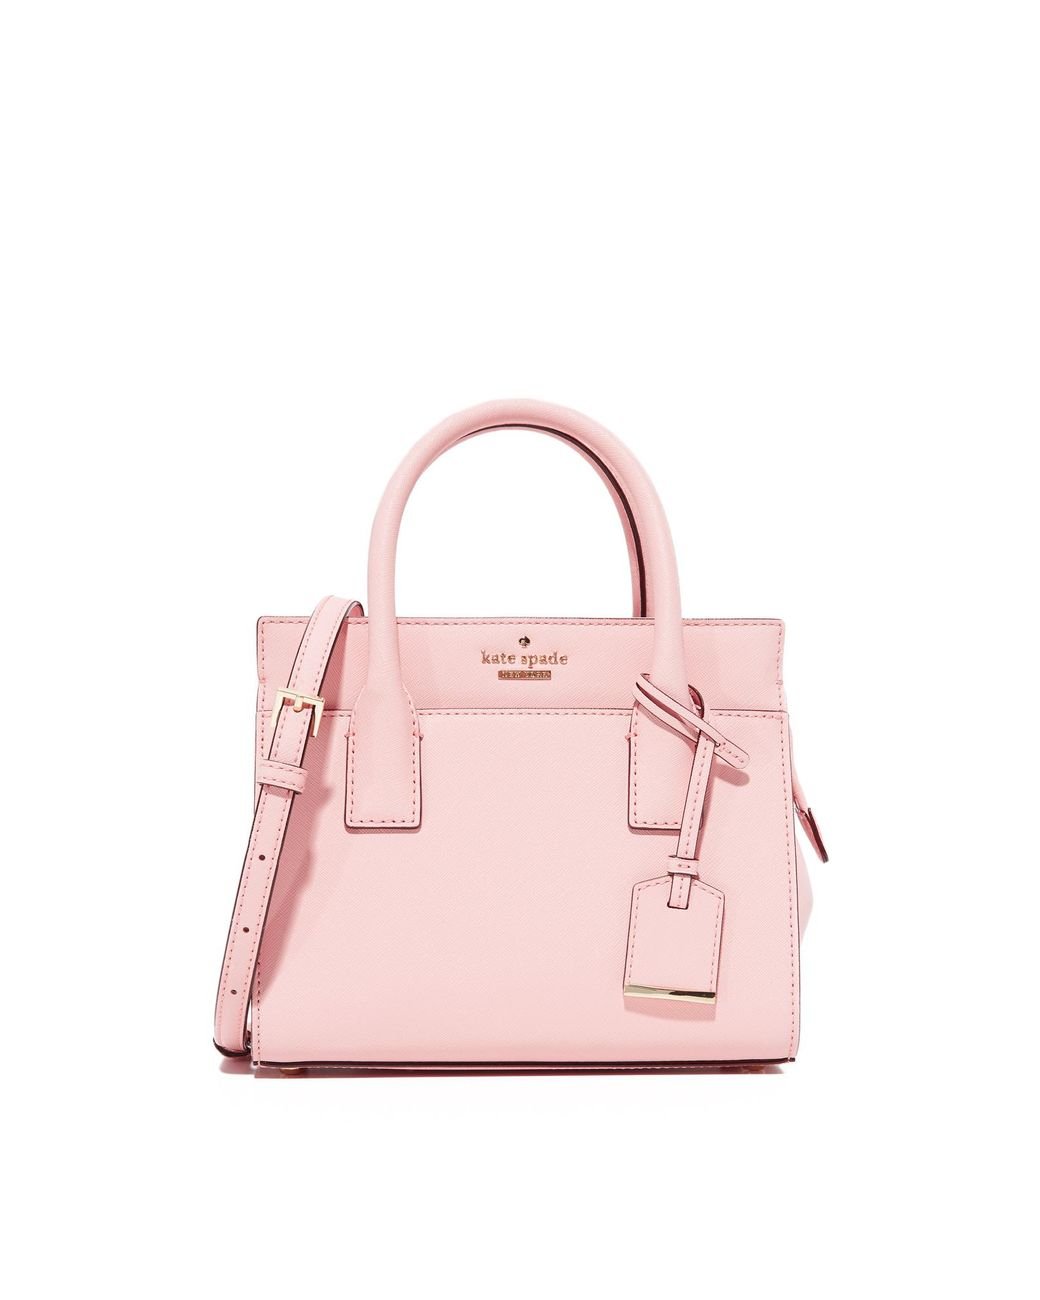 Kate Spade Mini Candace Cross Body Bag in Pink